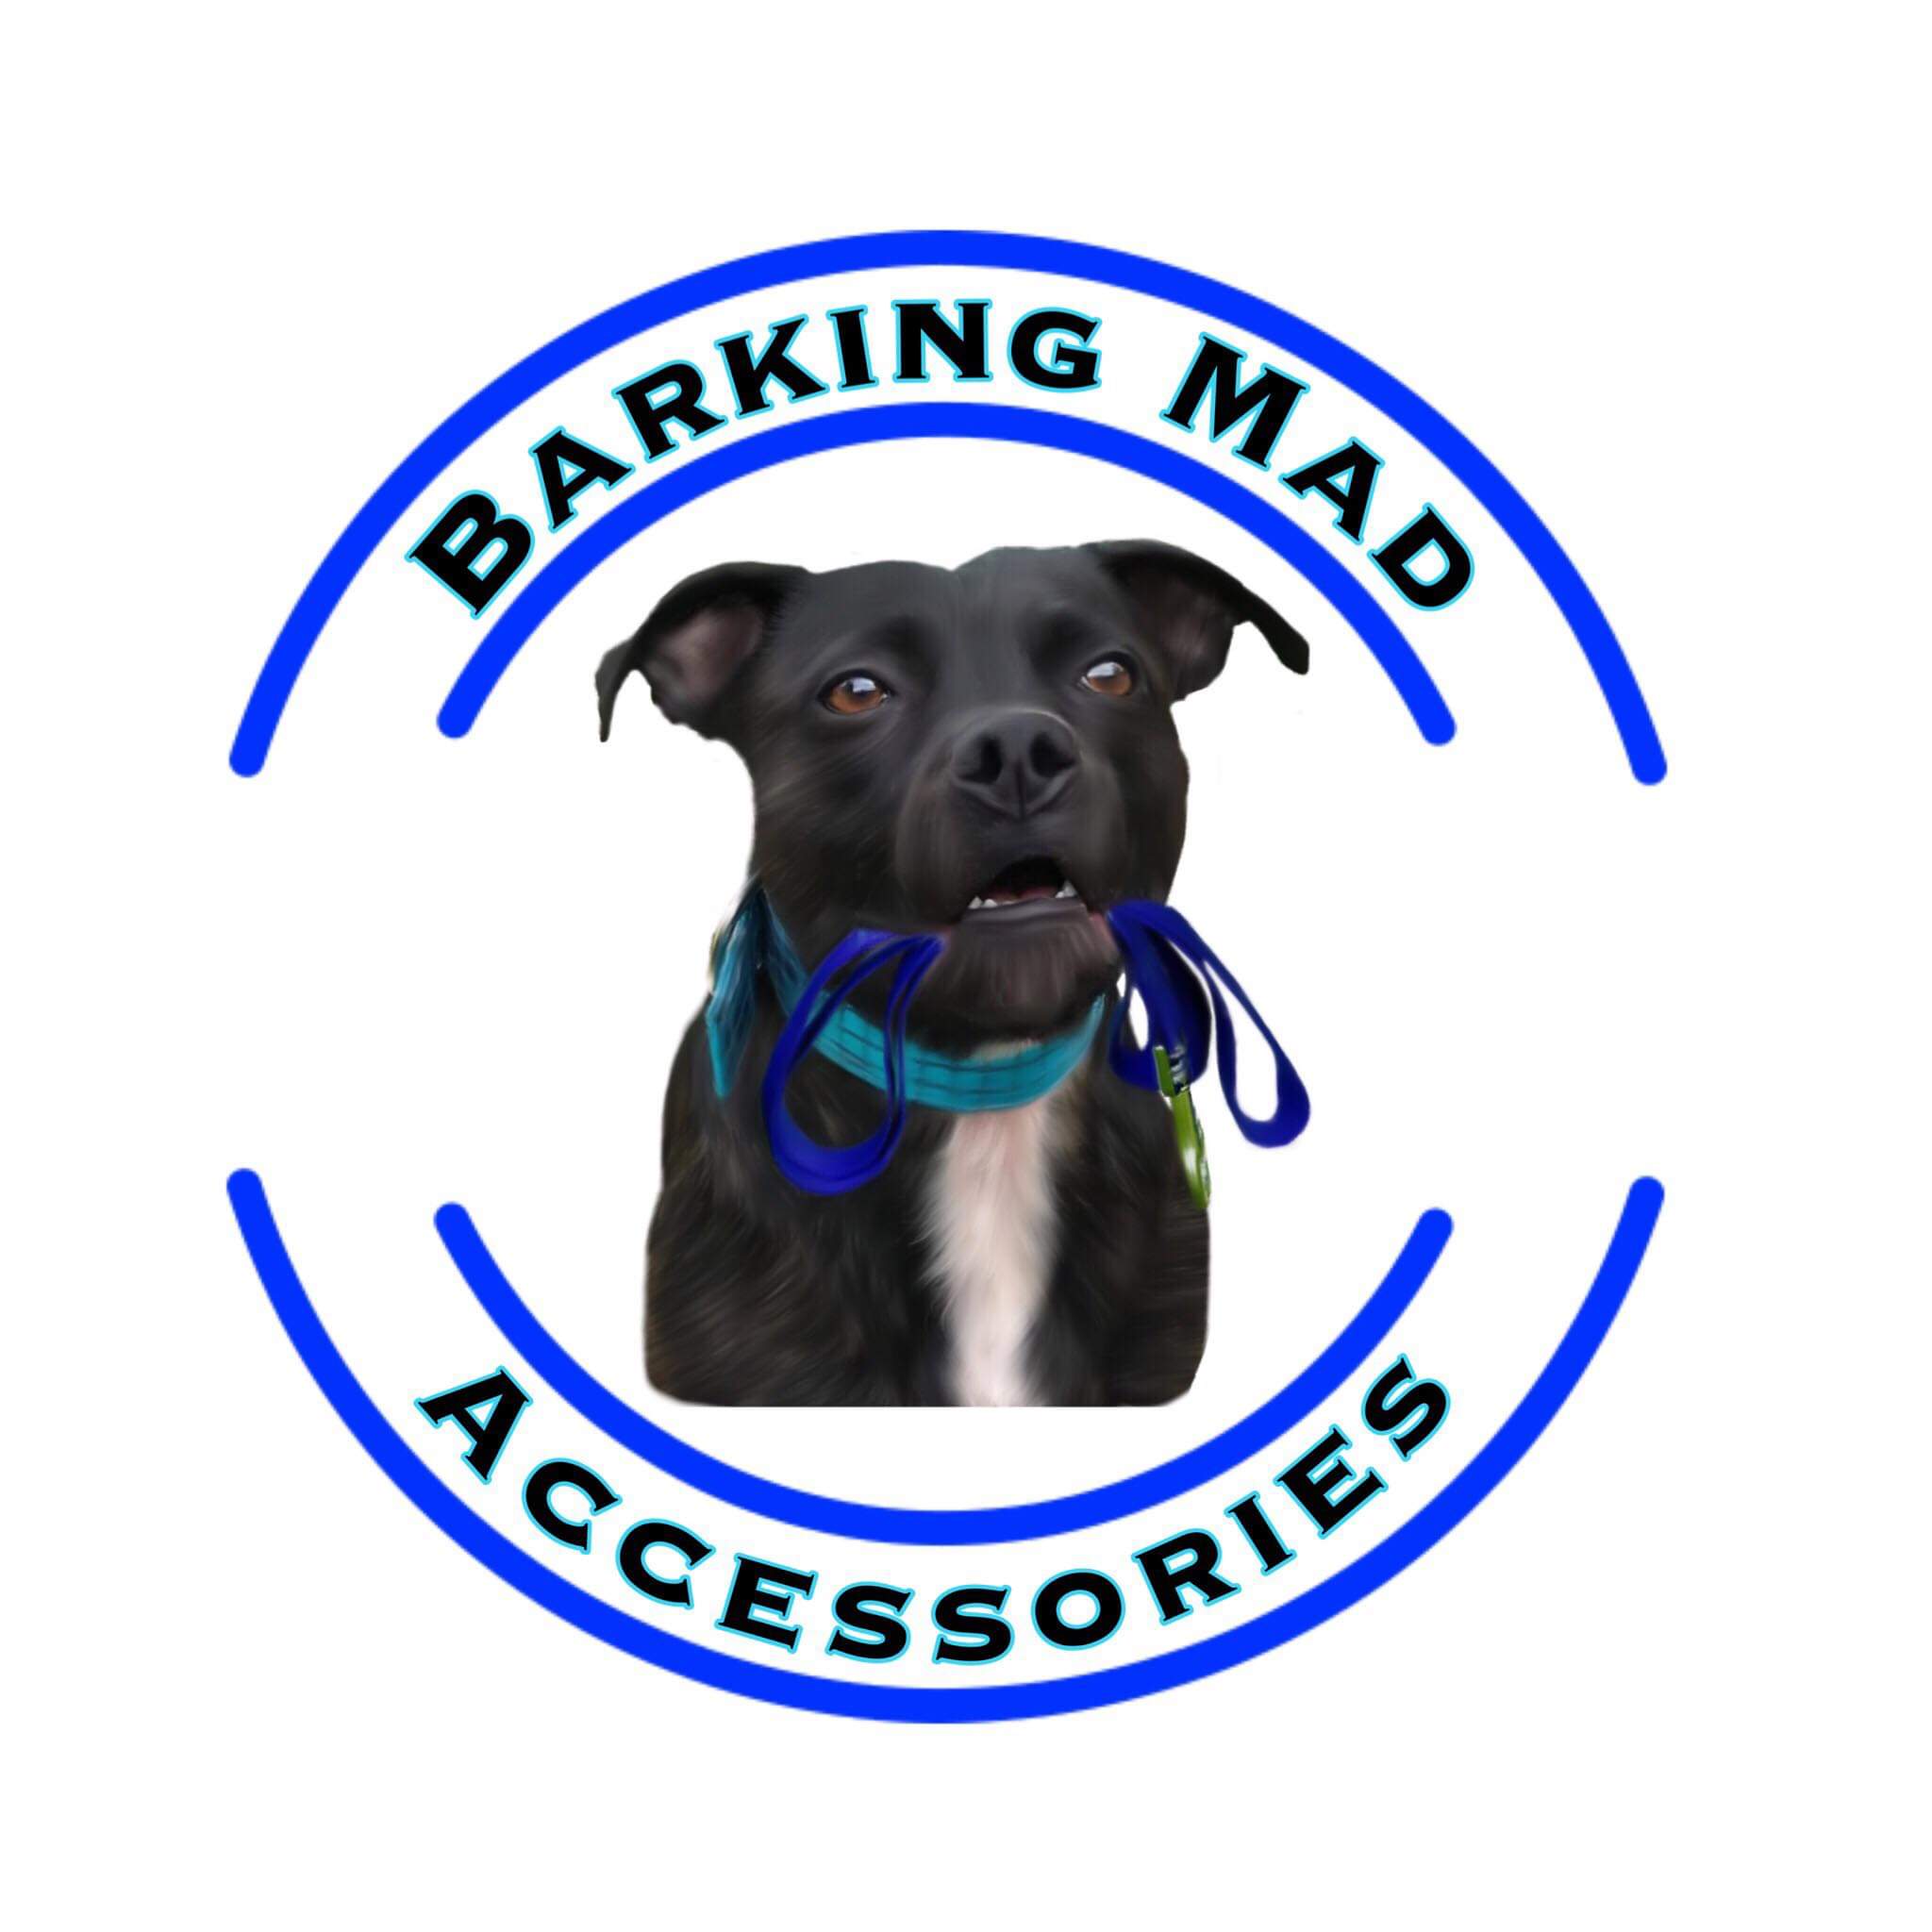 Barking Mad Accessories